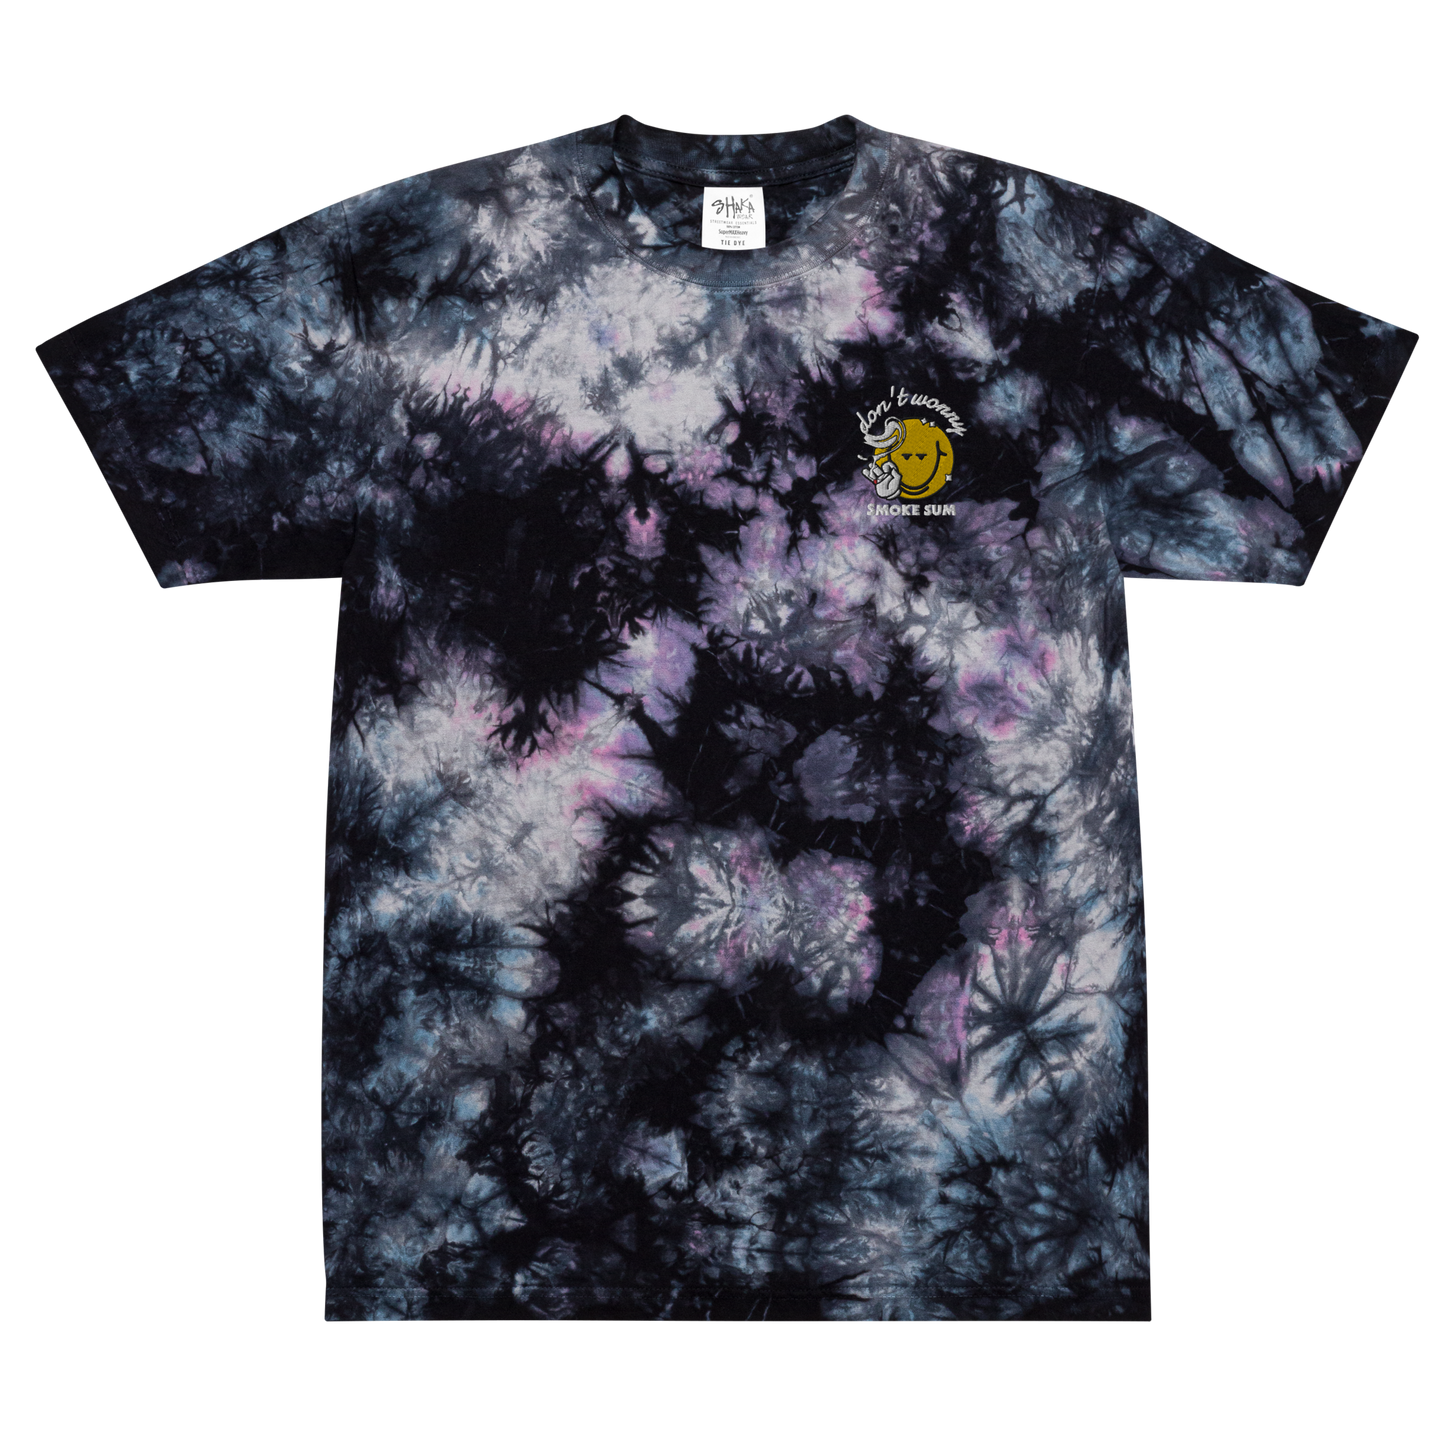 Smoke Sum Oversized tie-dye t-shirt